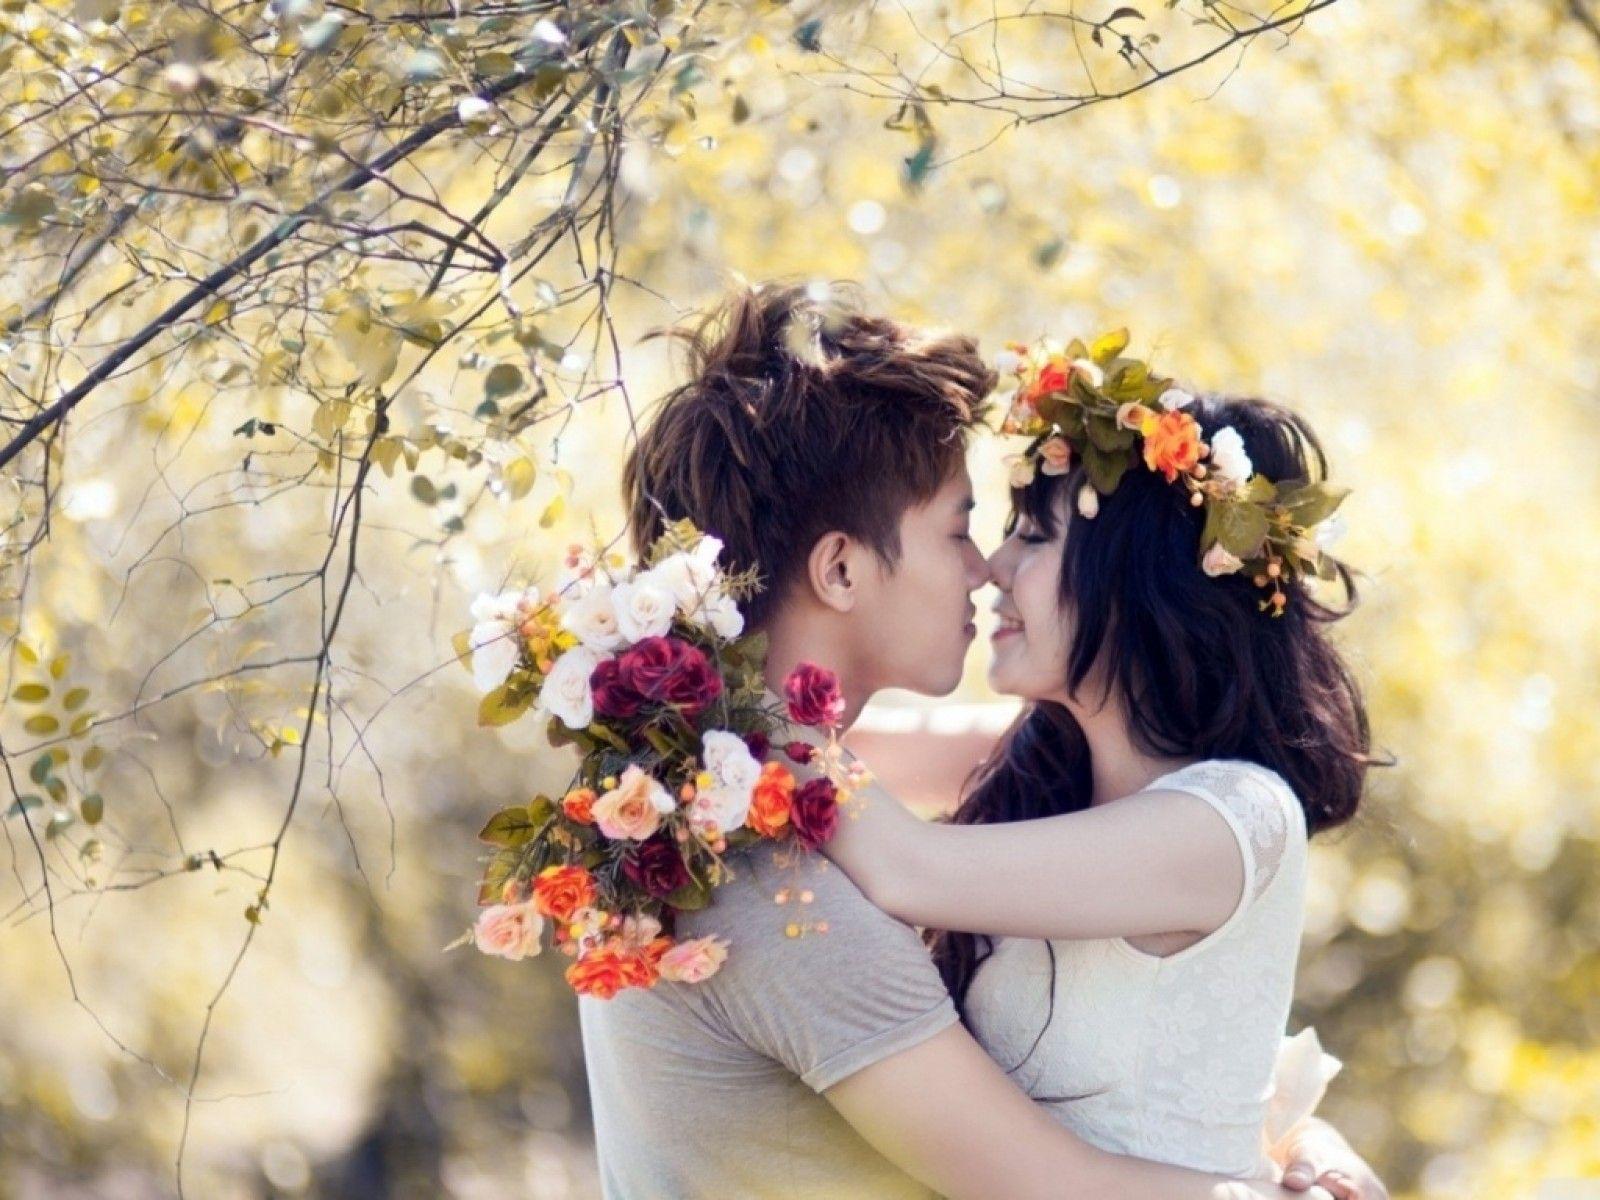 Boyfriend Girlfriend Romantic Couple Kiss Image Profile Picture.